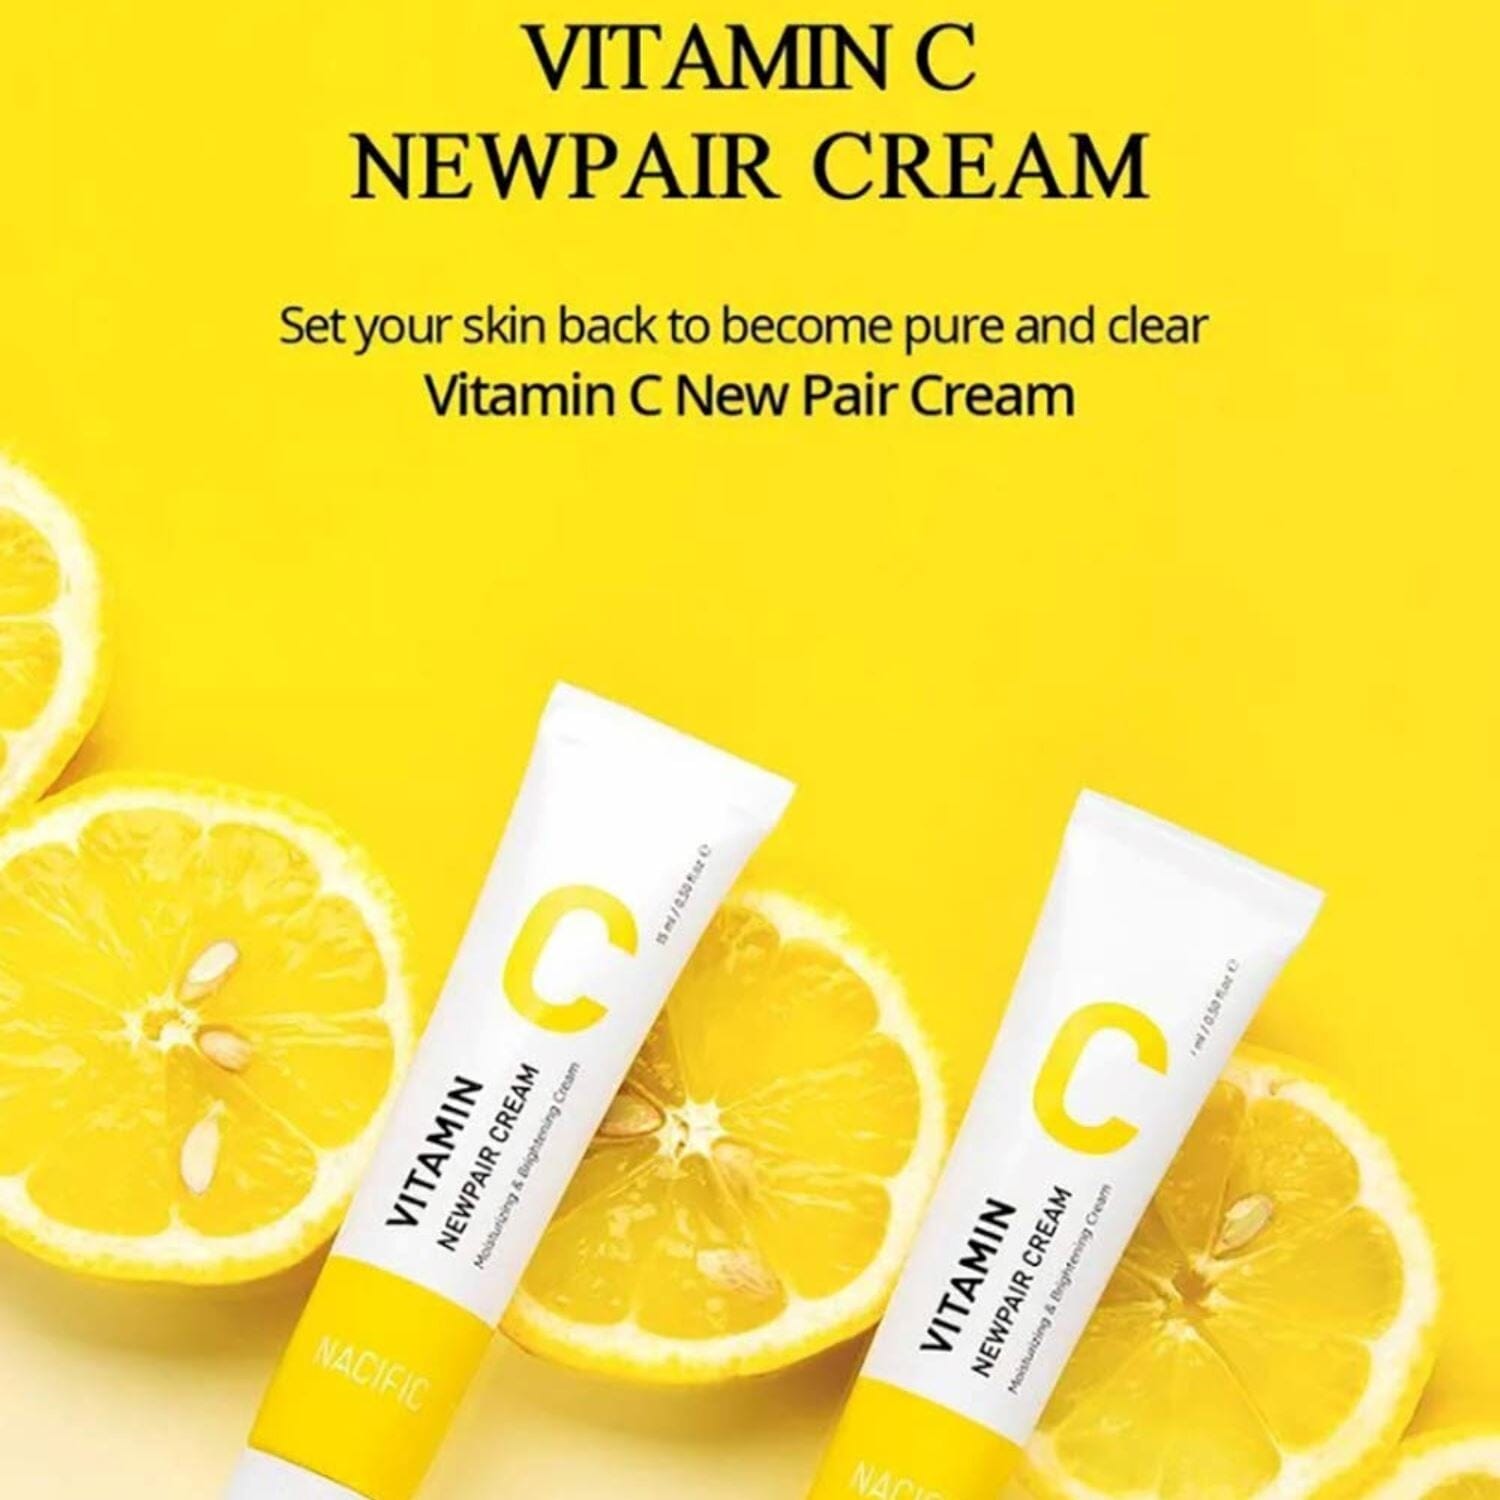 Nacific Vitamin C Newpair Cream 15ml, at Orion Beauty. Nacific Official Sole Authorized Retailer in Sri Lanka!